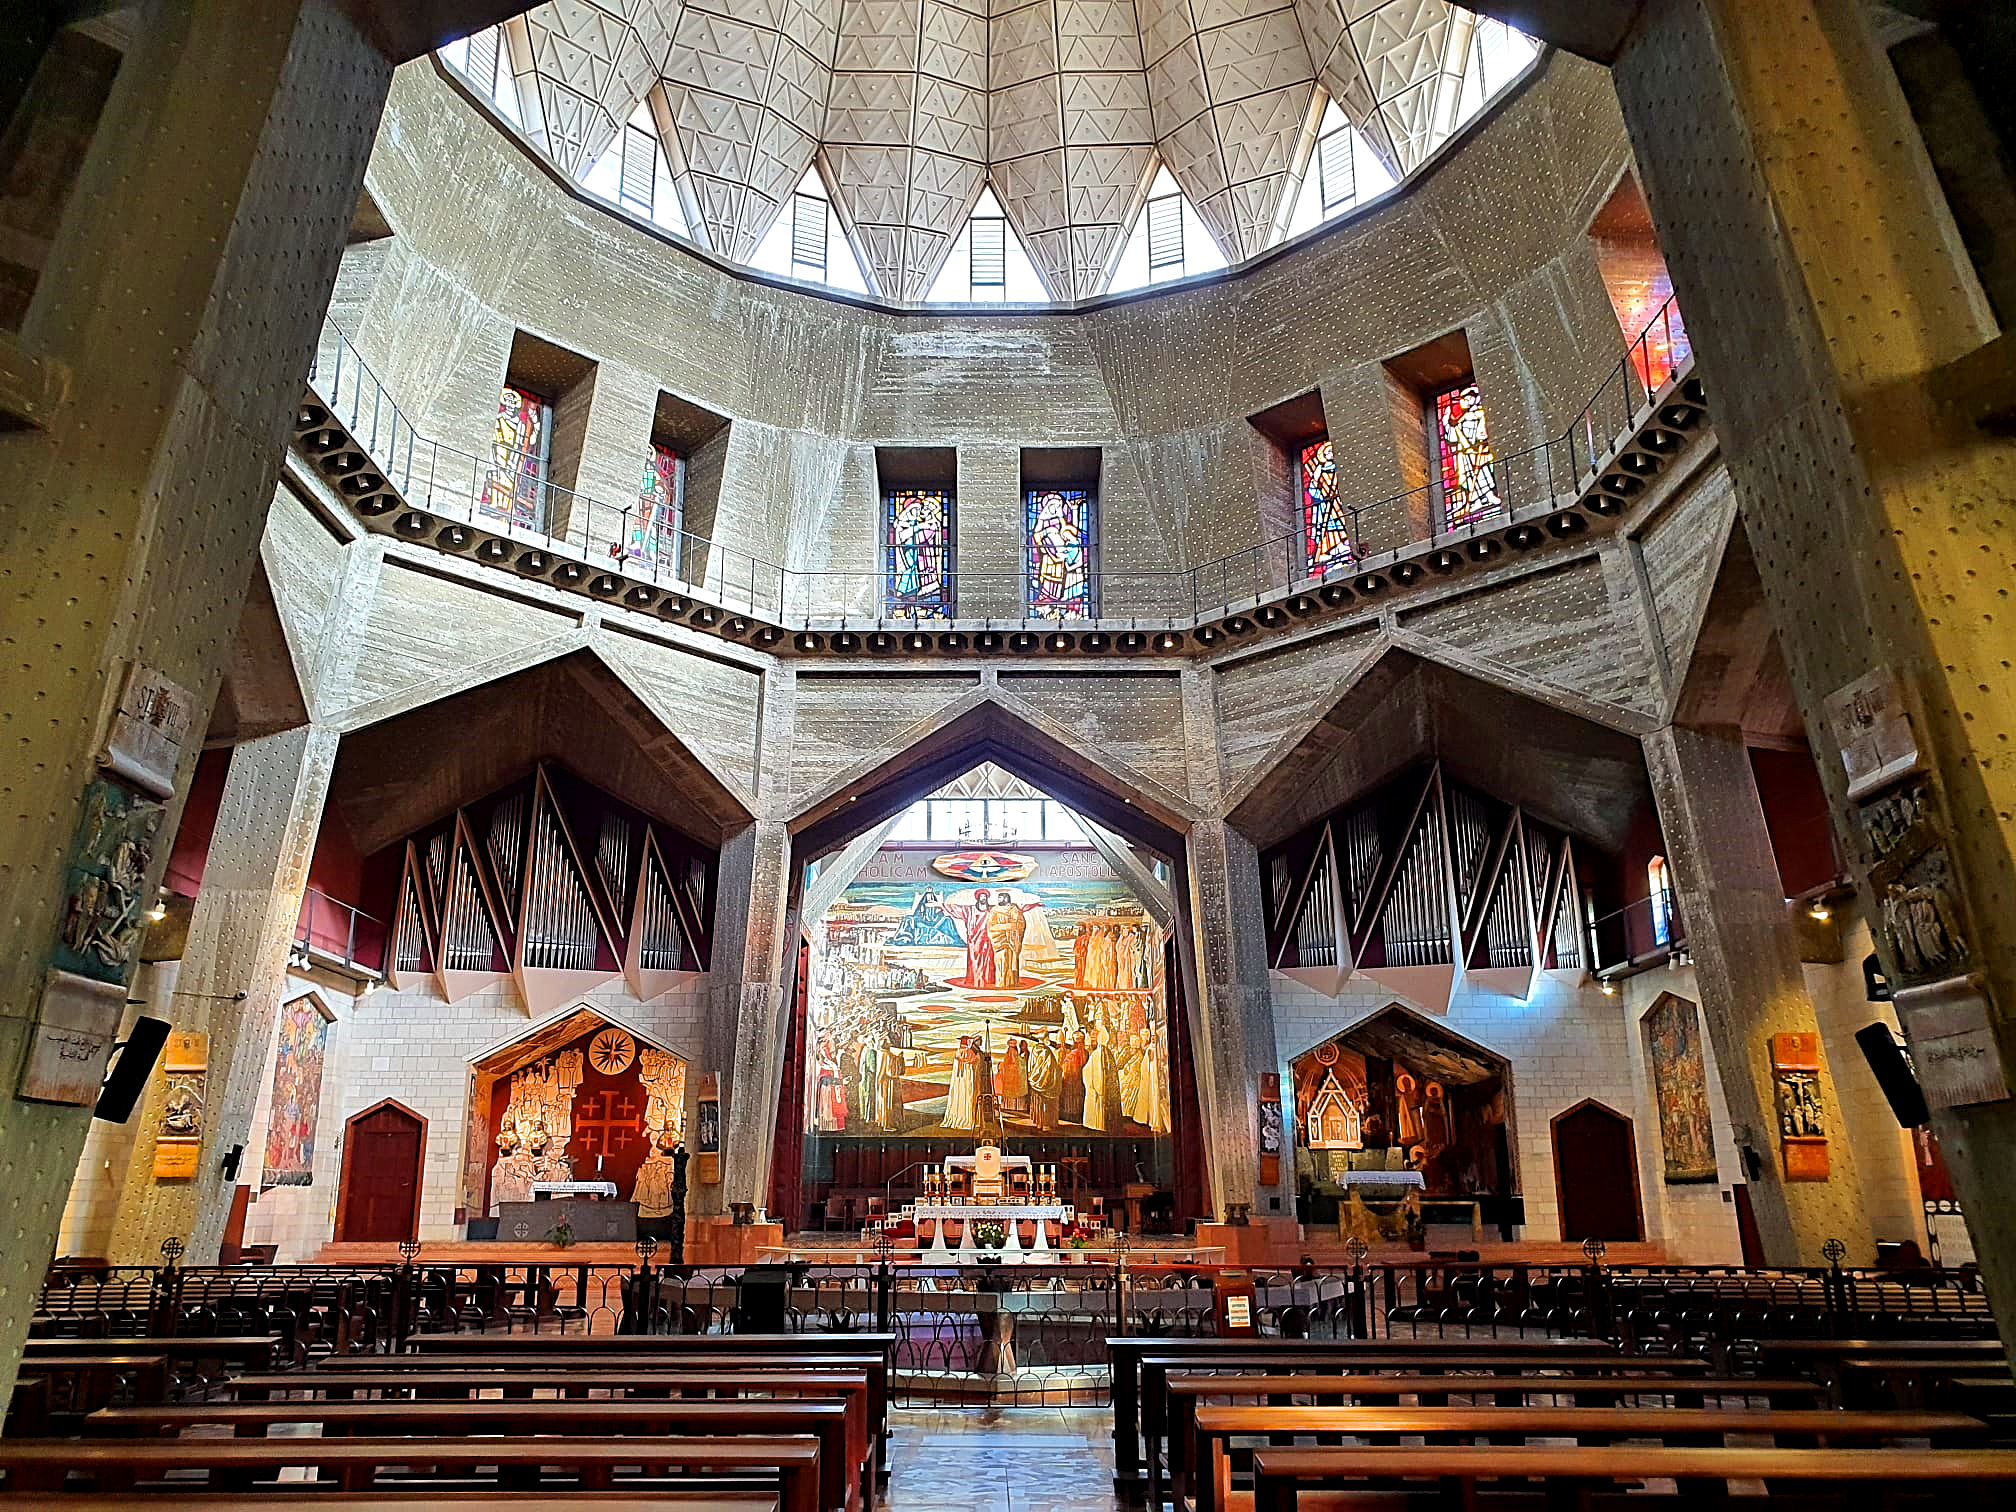 Inside the Annunciation Church, Nazareth